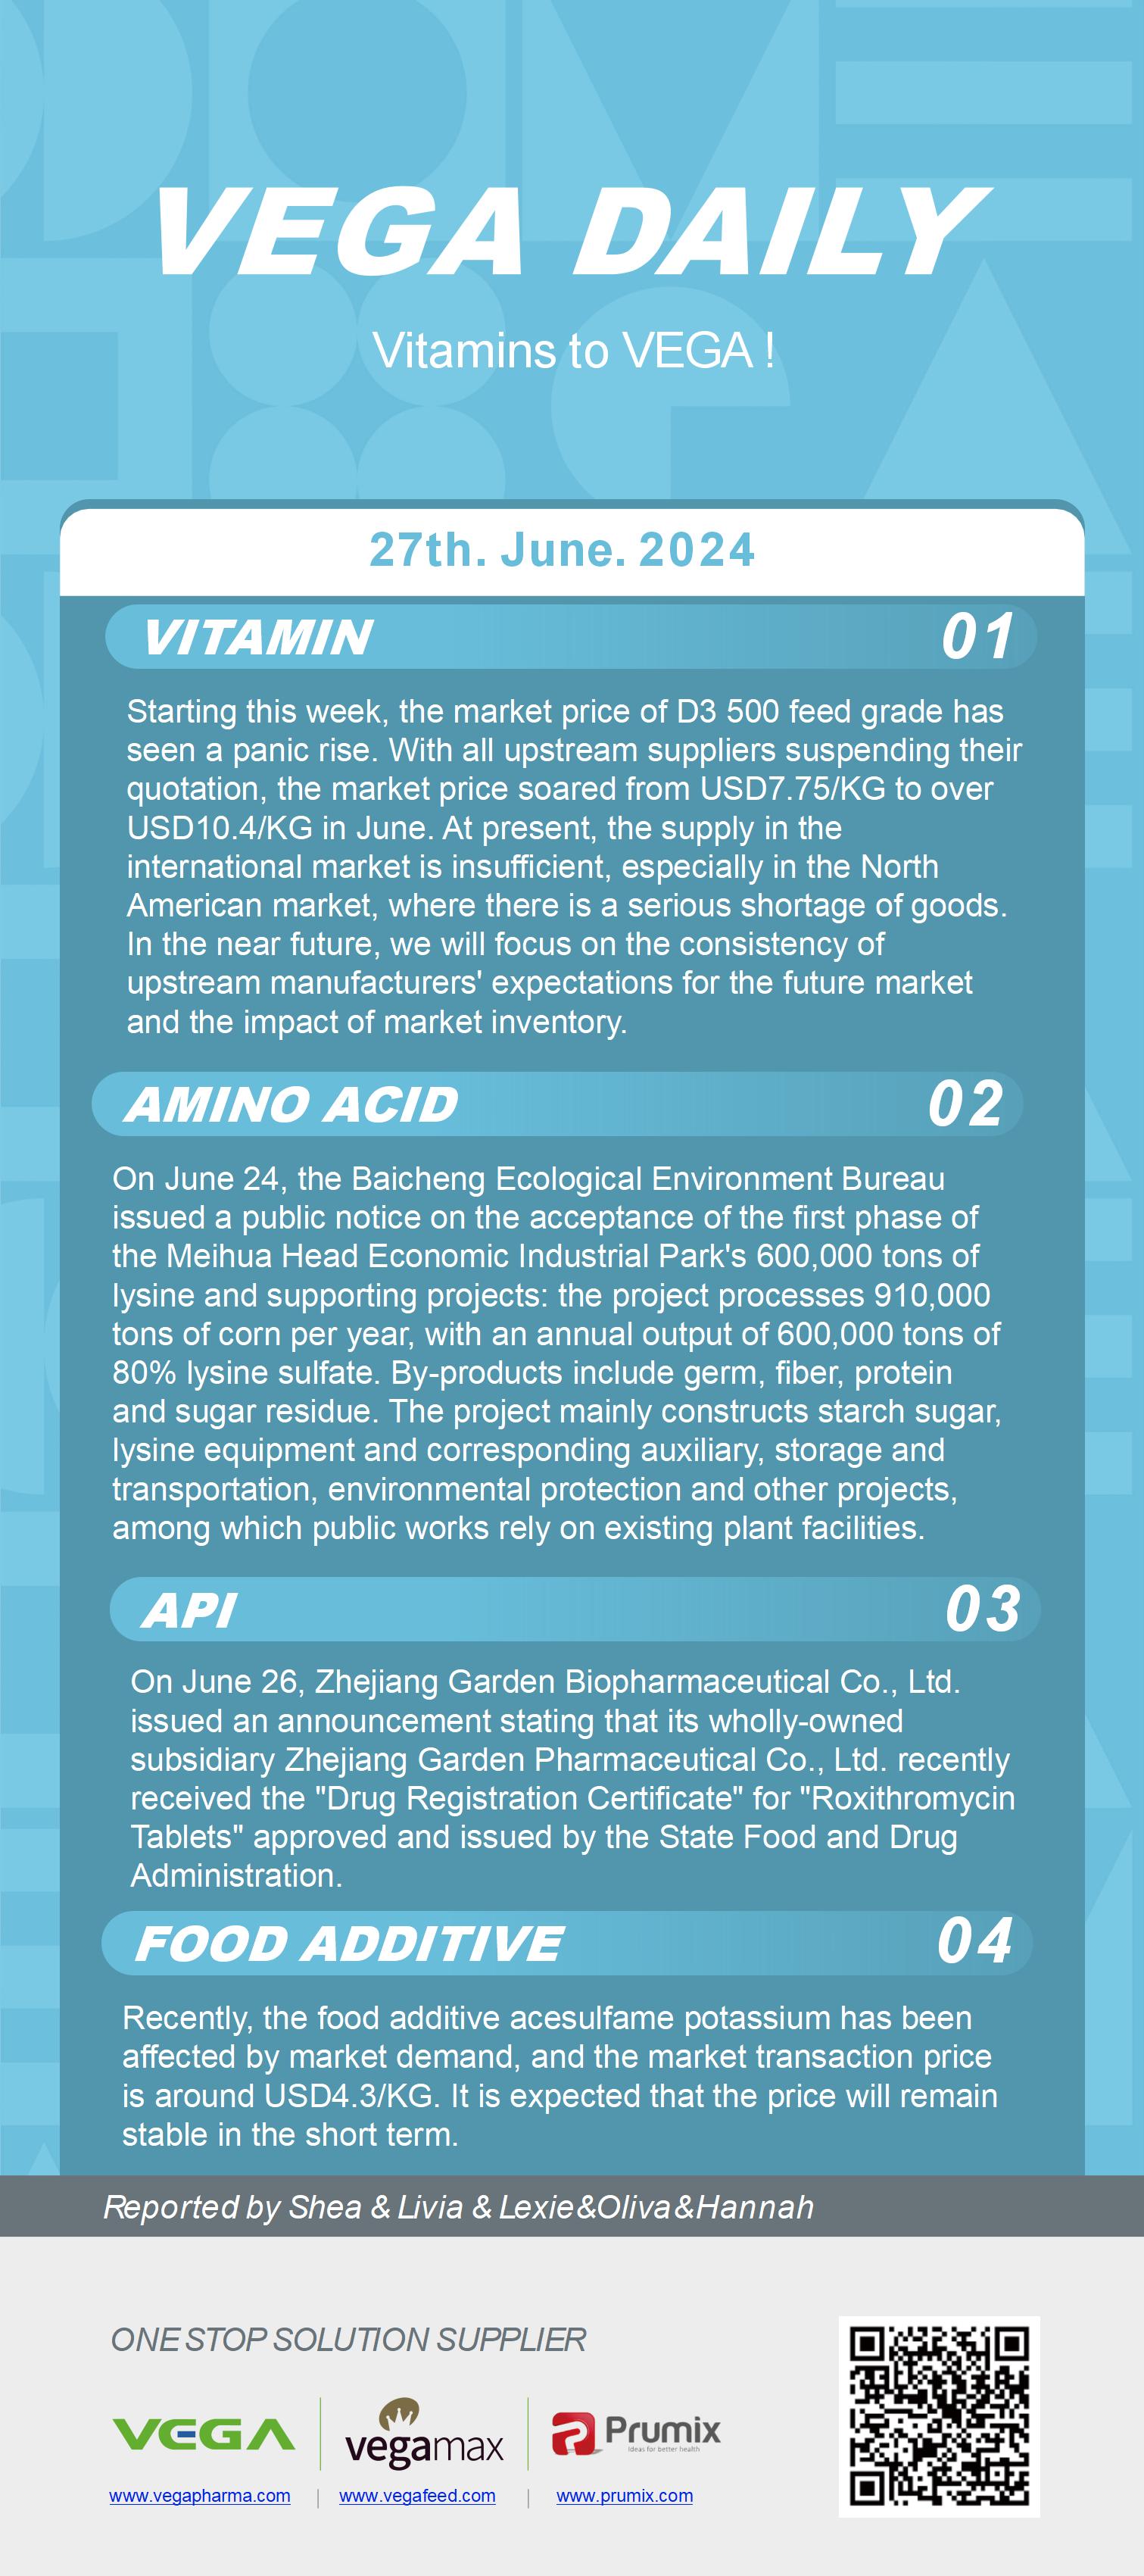 Vega Daily Dated on Jun 27th 2024 Vitamin Amino Acid APl Food Additives.jpg